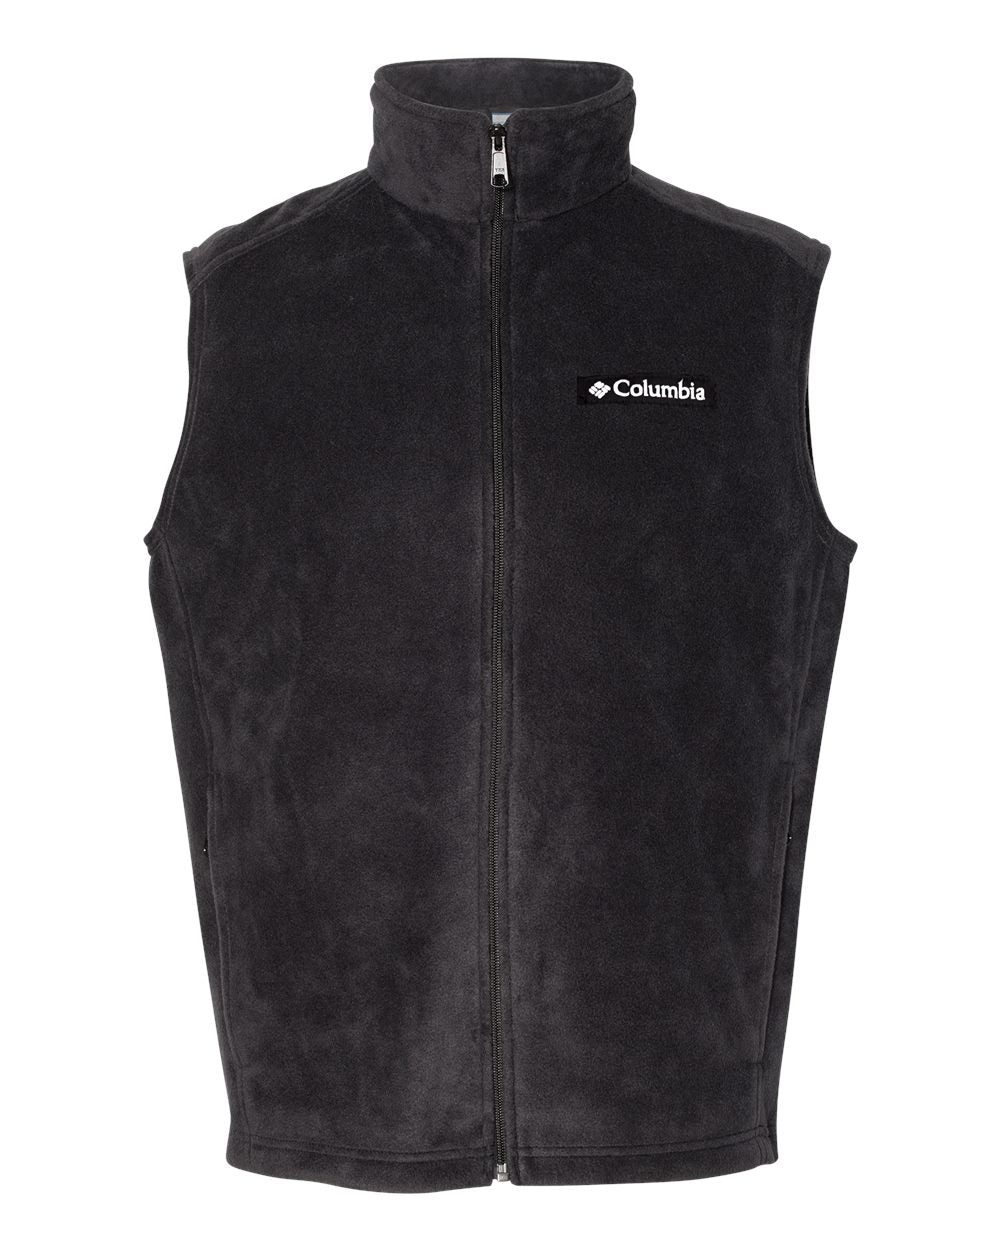 Worthington Staff Unisex Fit Columbia Full Zip Fleece Vest